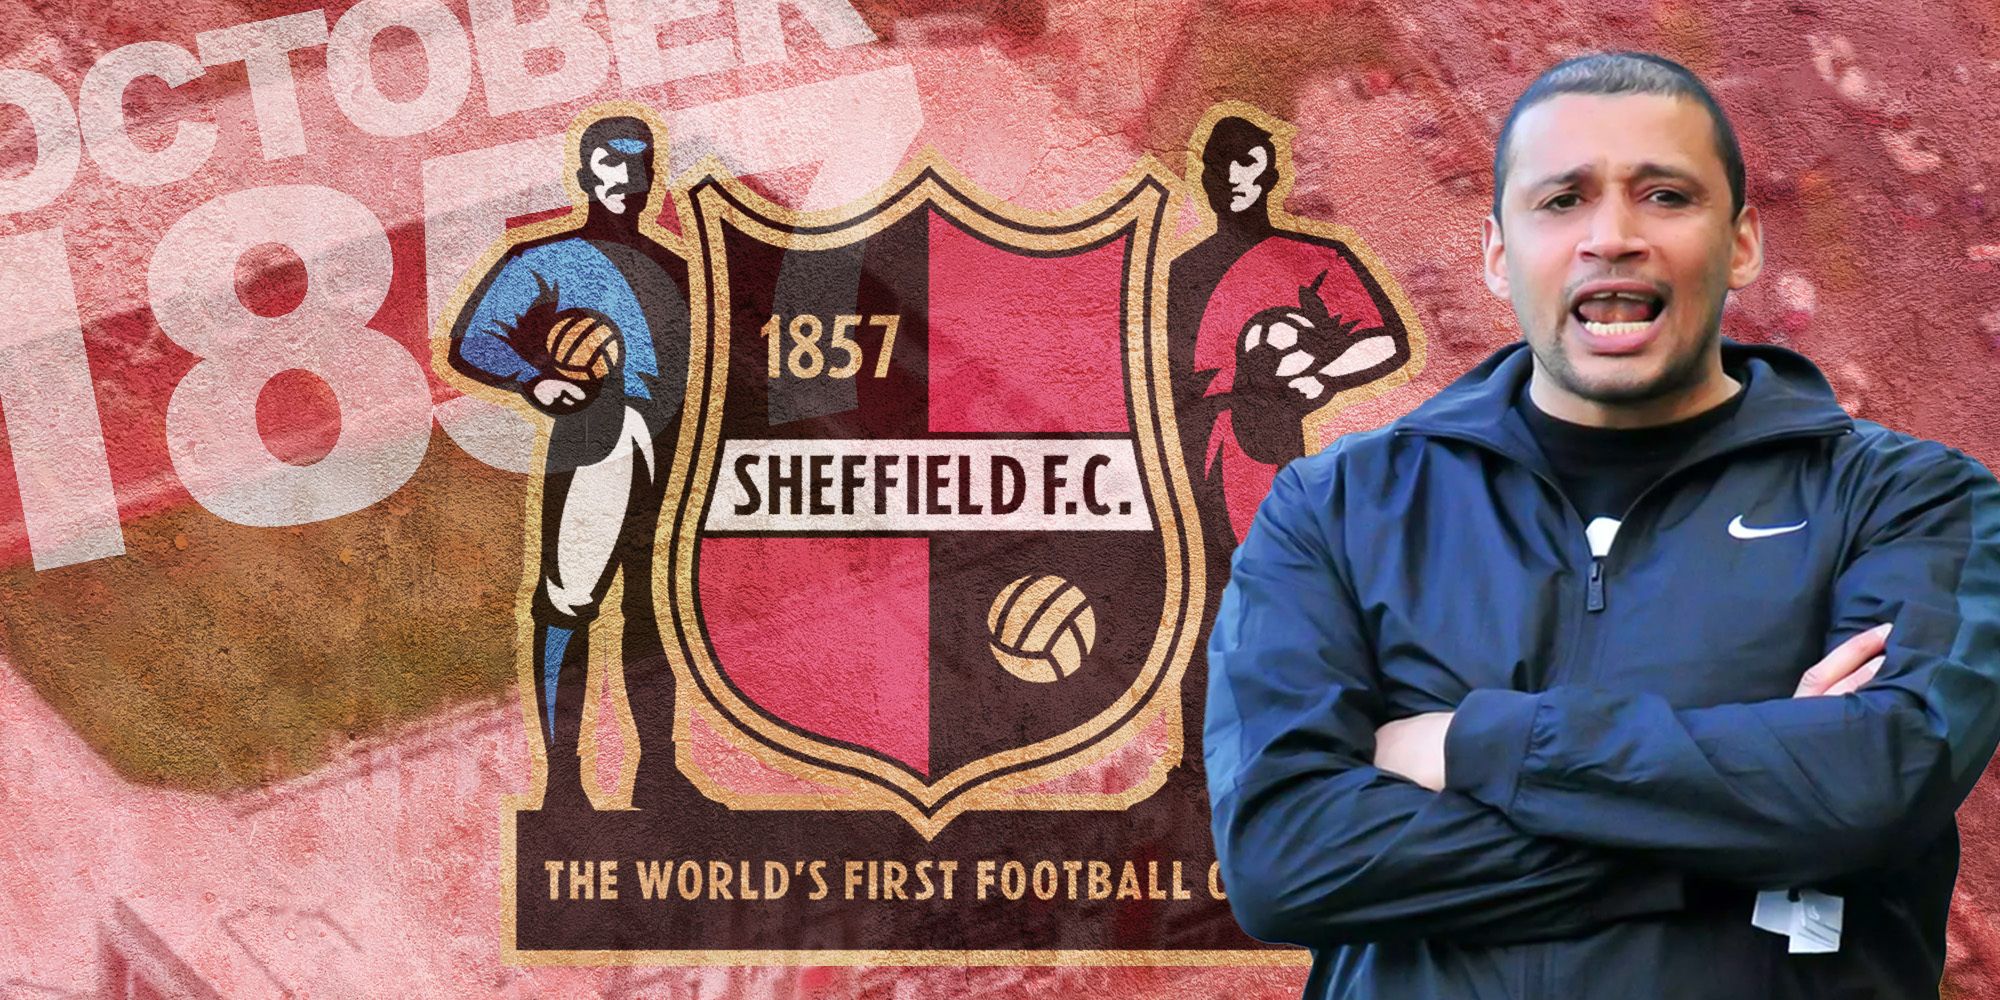 The world's oldest football club, Sheffield FC